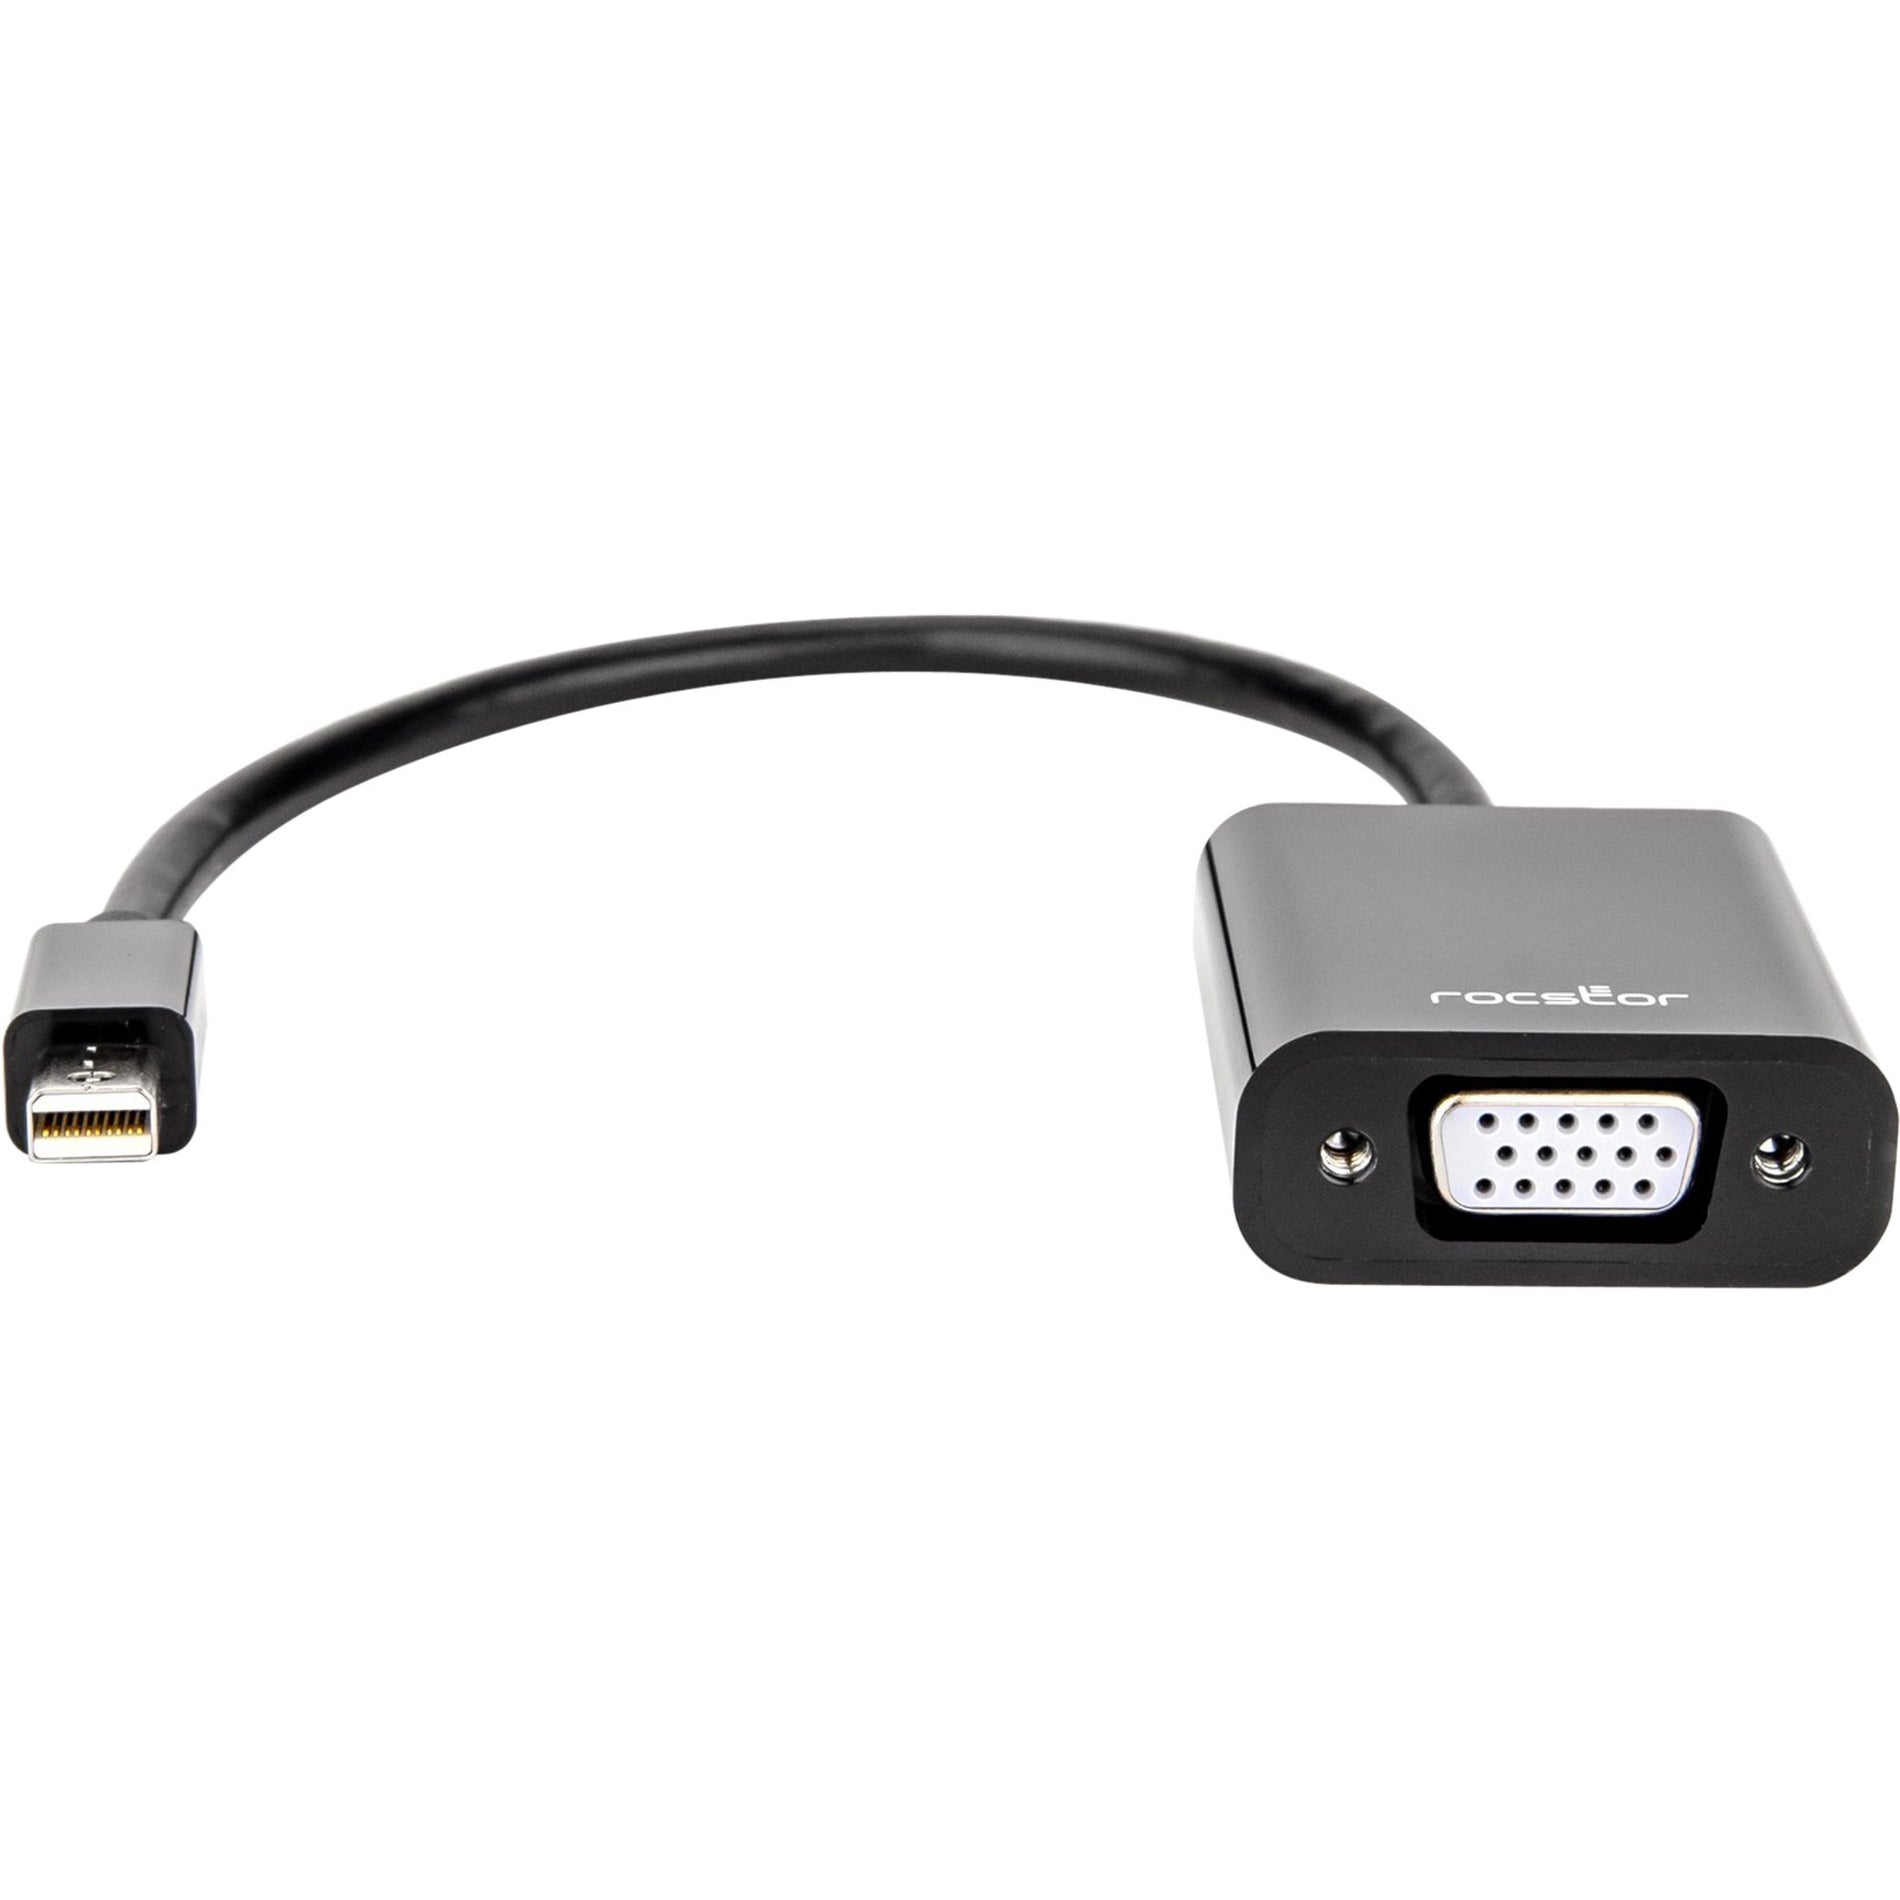 Rocstor Y10A199-B1 Premium Mini DisplayPort to VGA Video Adapter 6" Cable Black